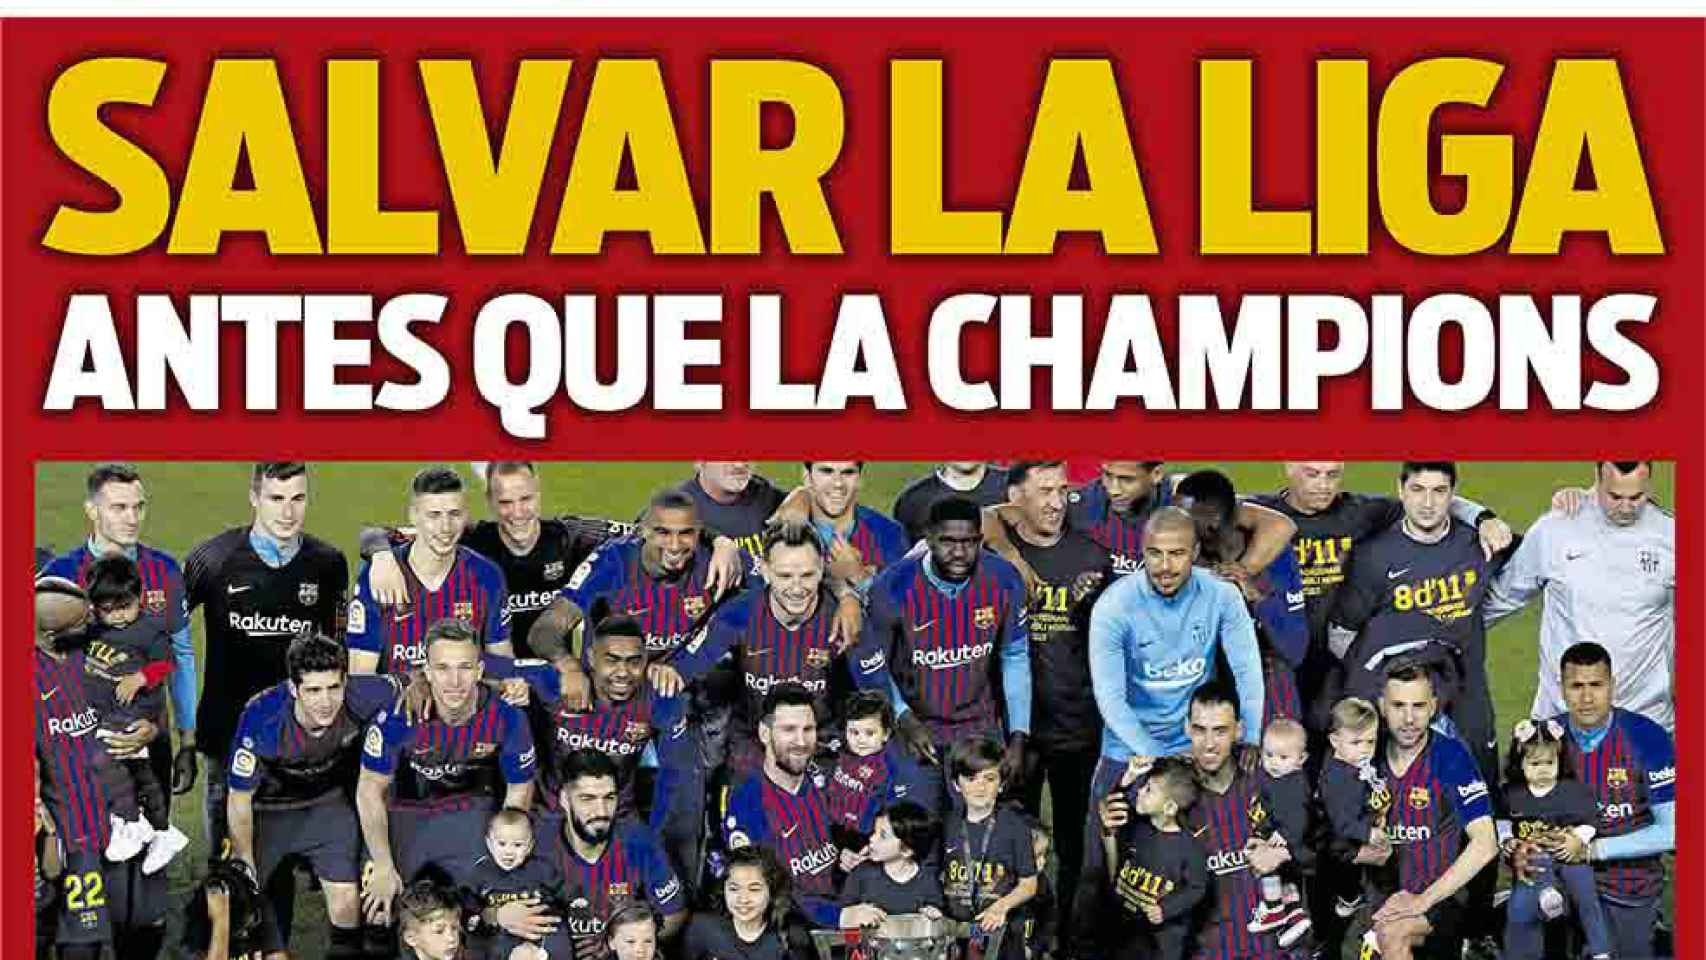 La portada del diario Sport (29/03/2020)